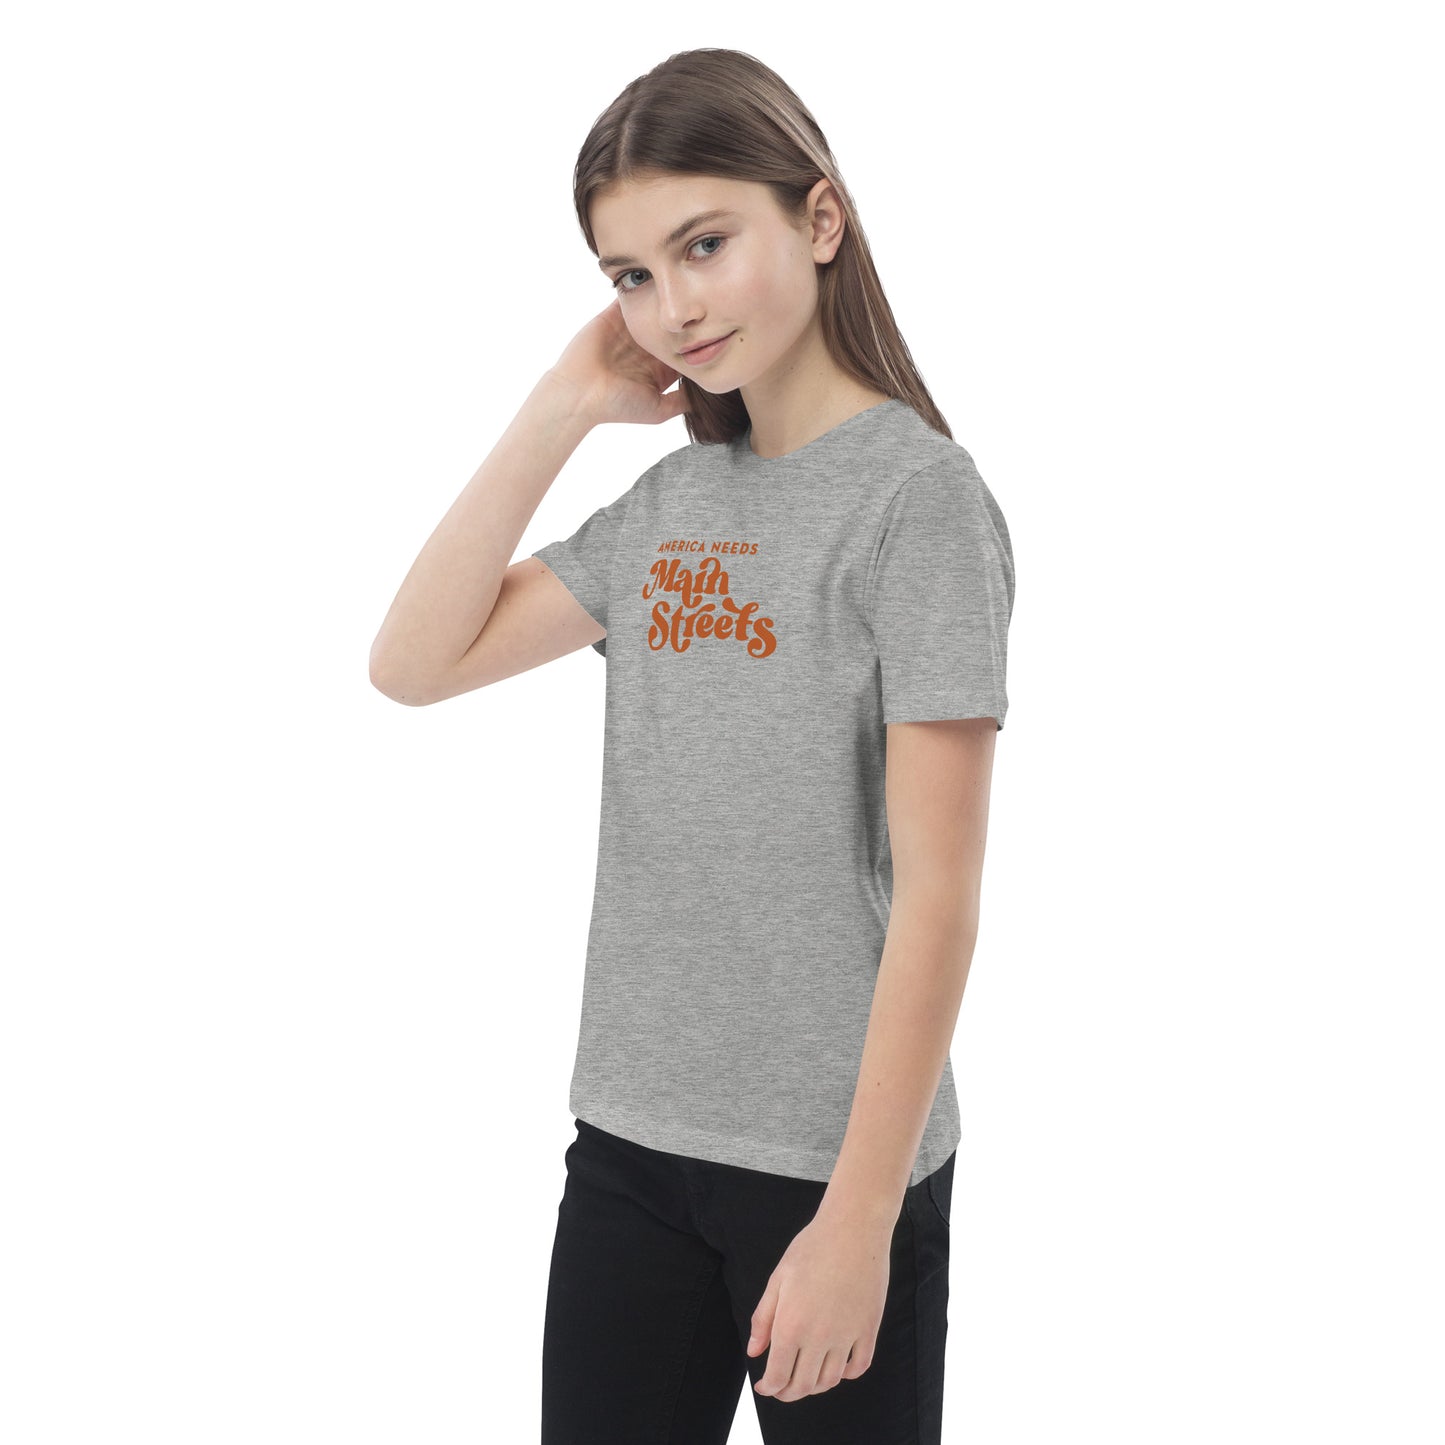 "America Needs Main Streets" Orange Organic Cotton Kids T-shirt